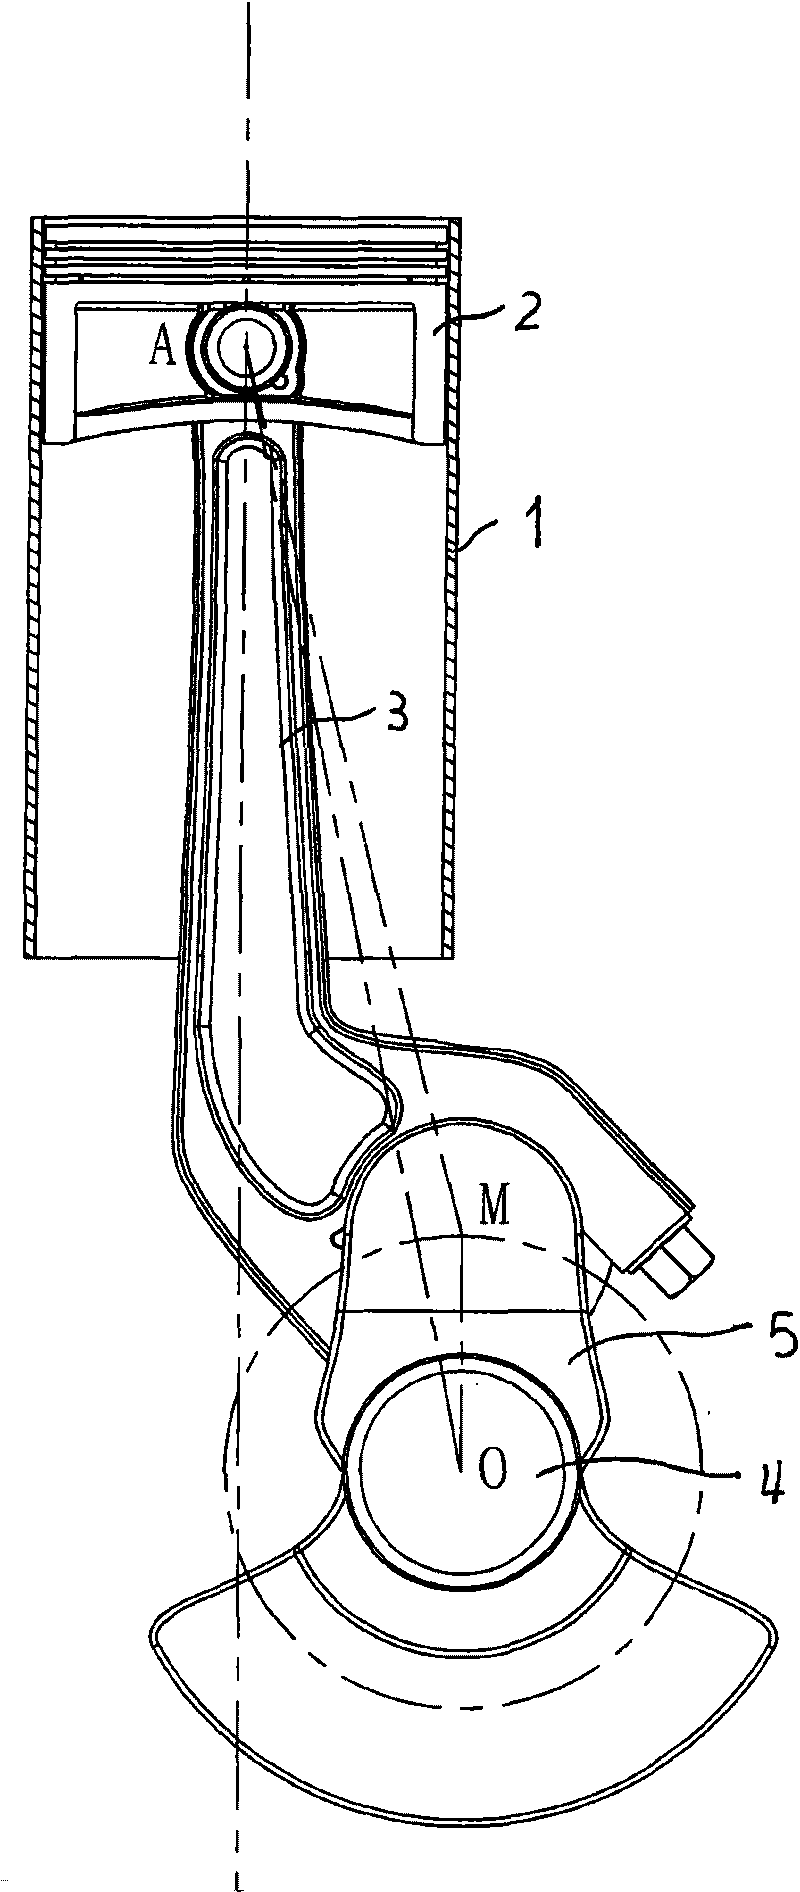 Bent connecting rod offset bent shaft mechanism and bent connecting rod offset bent shaft motor